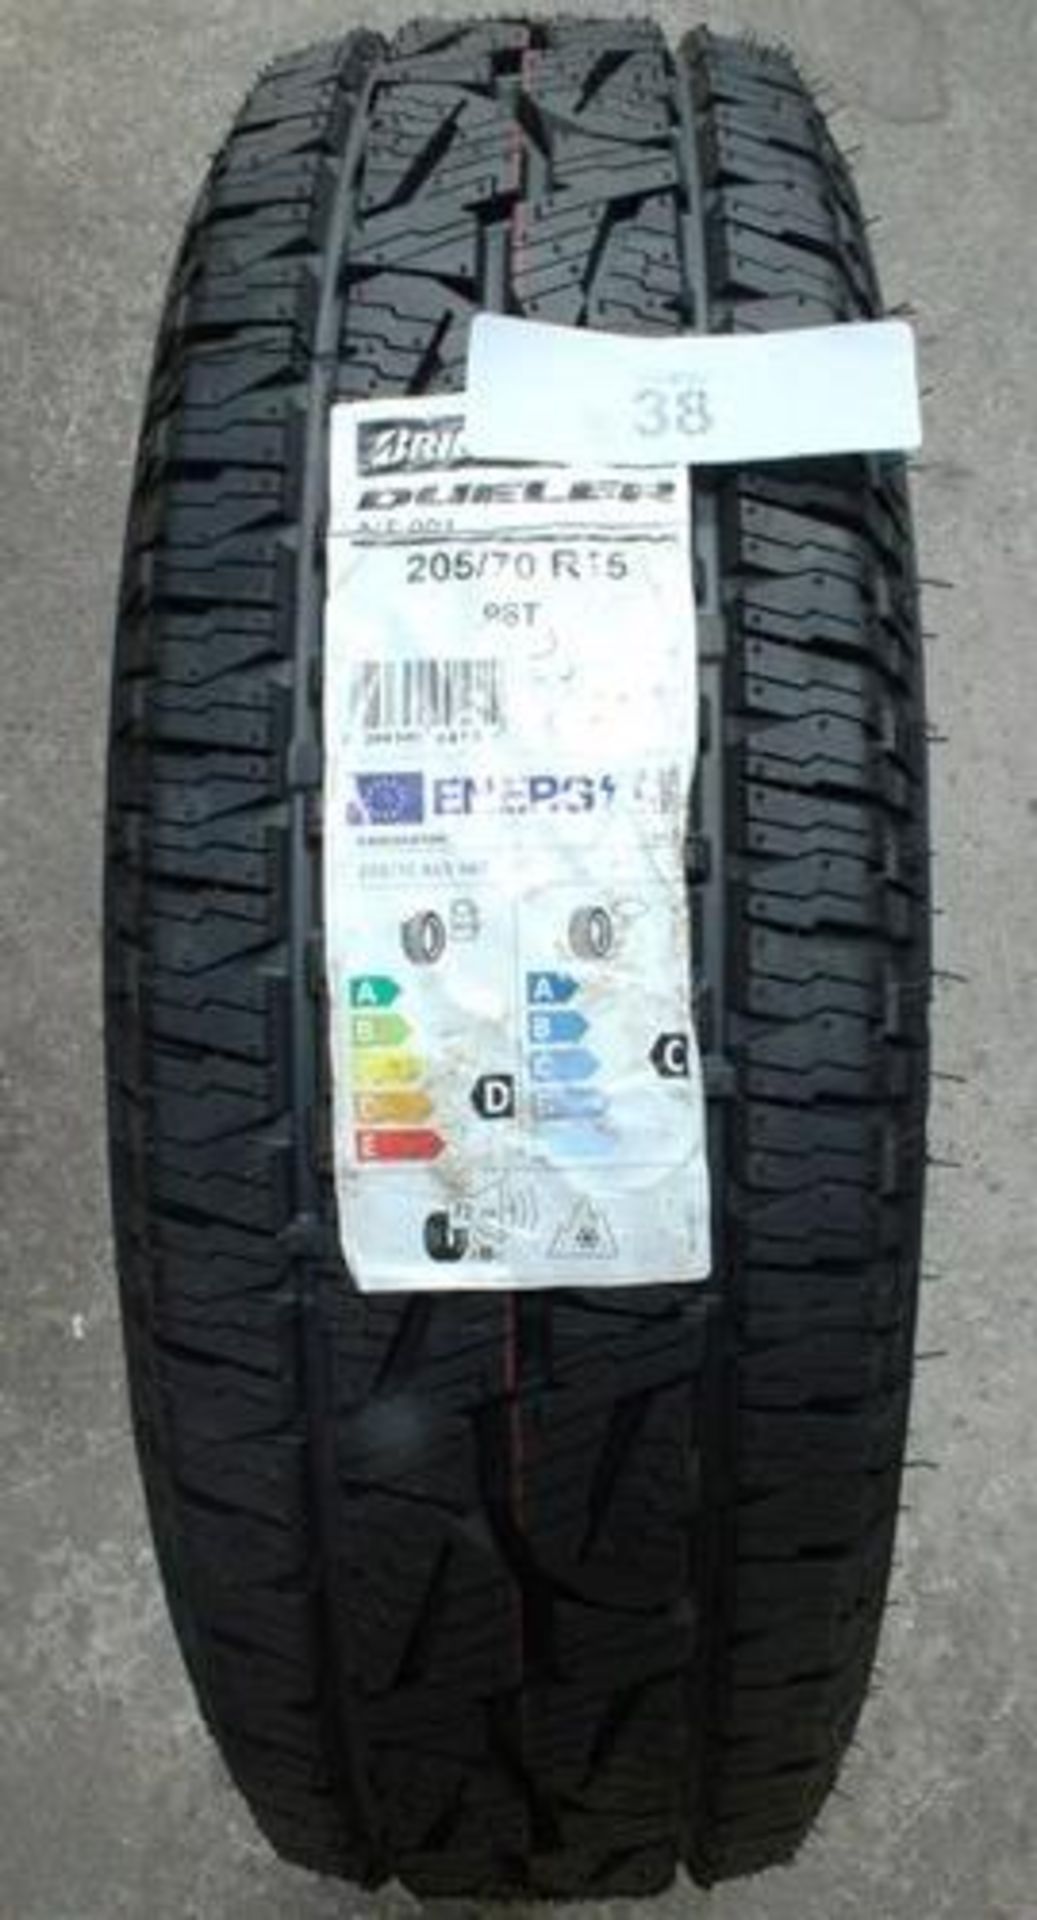 1 x Bridgestone Dueller A/T 001 tyre, size 205/70R16 96T - New with labels (GS4)